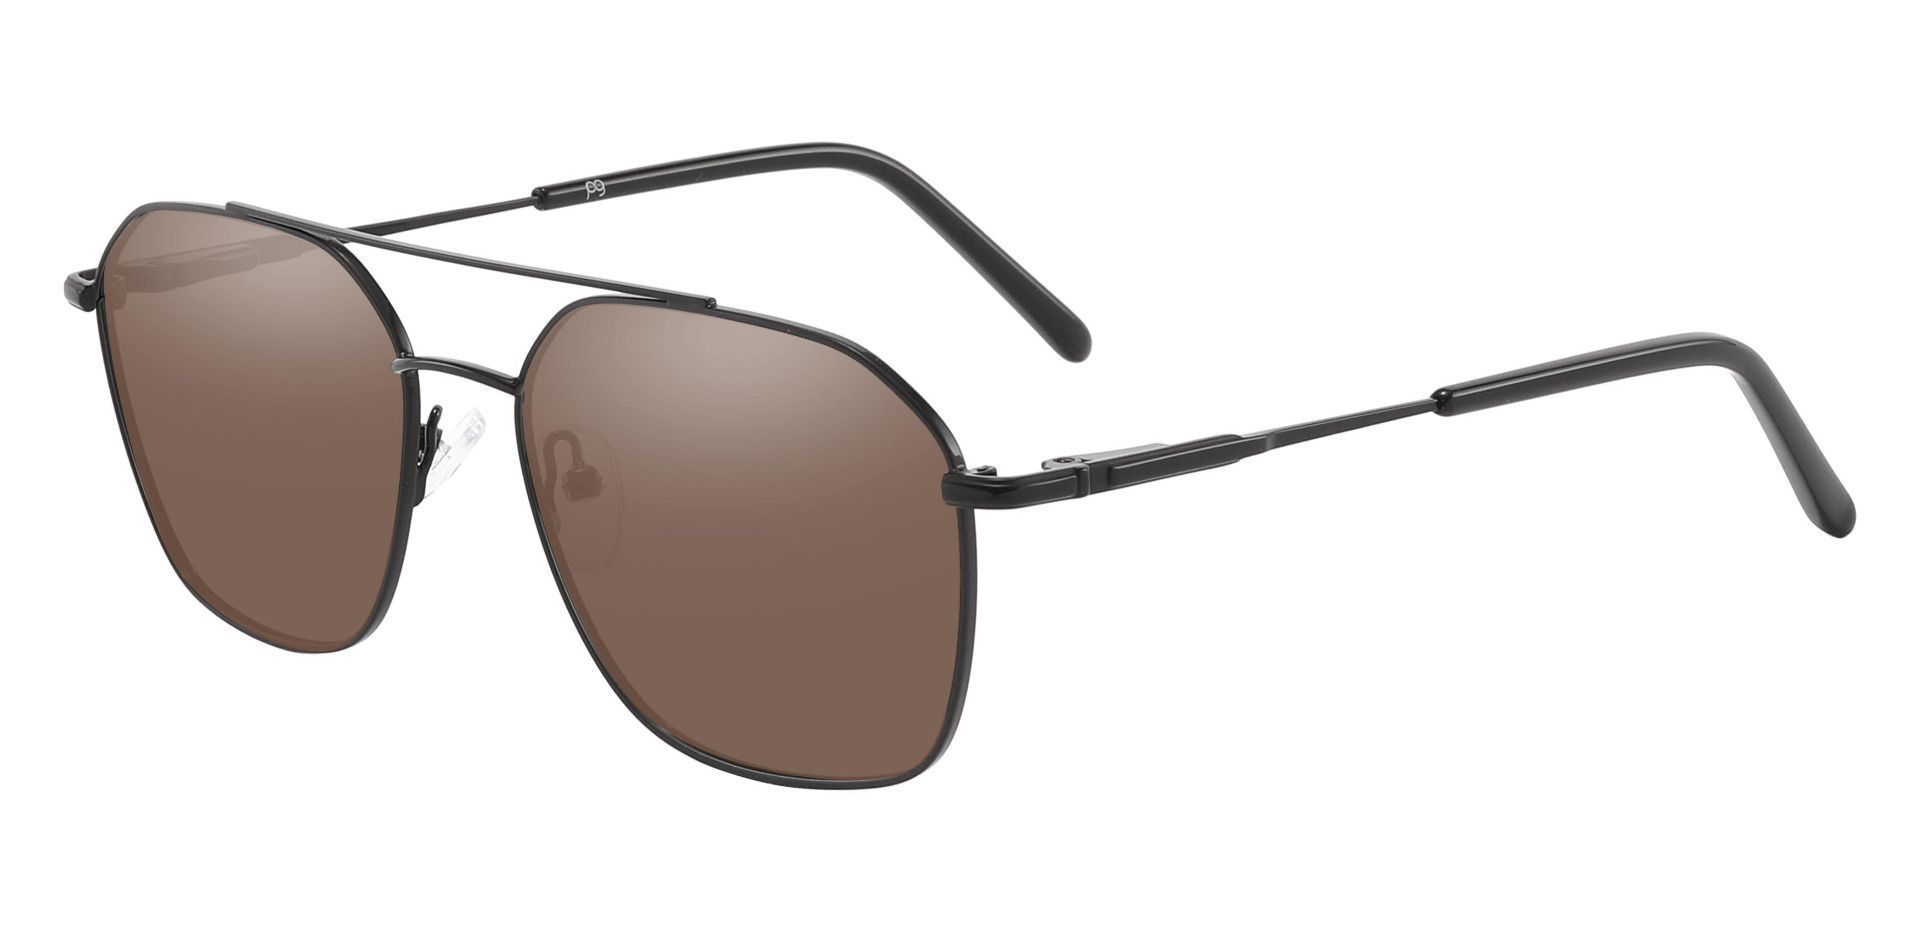 Harvey Aviator Lined Bifocal Sunglasses - Black Frame With Brown Lenses